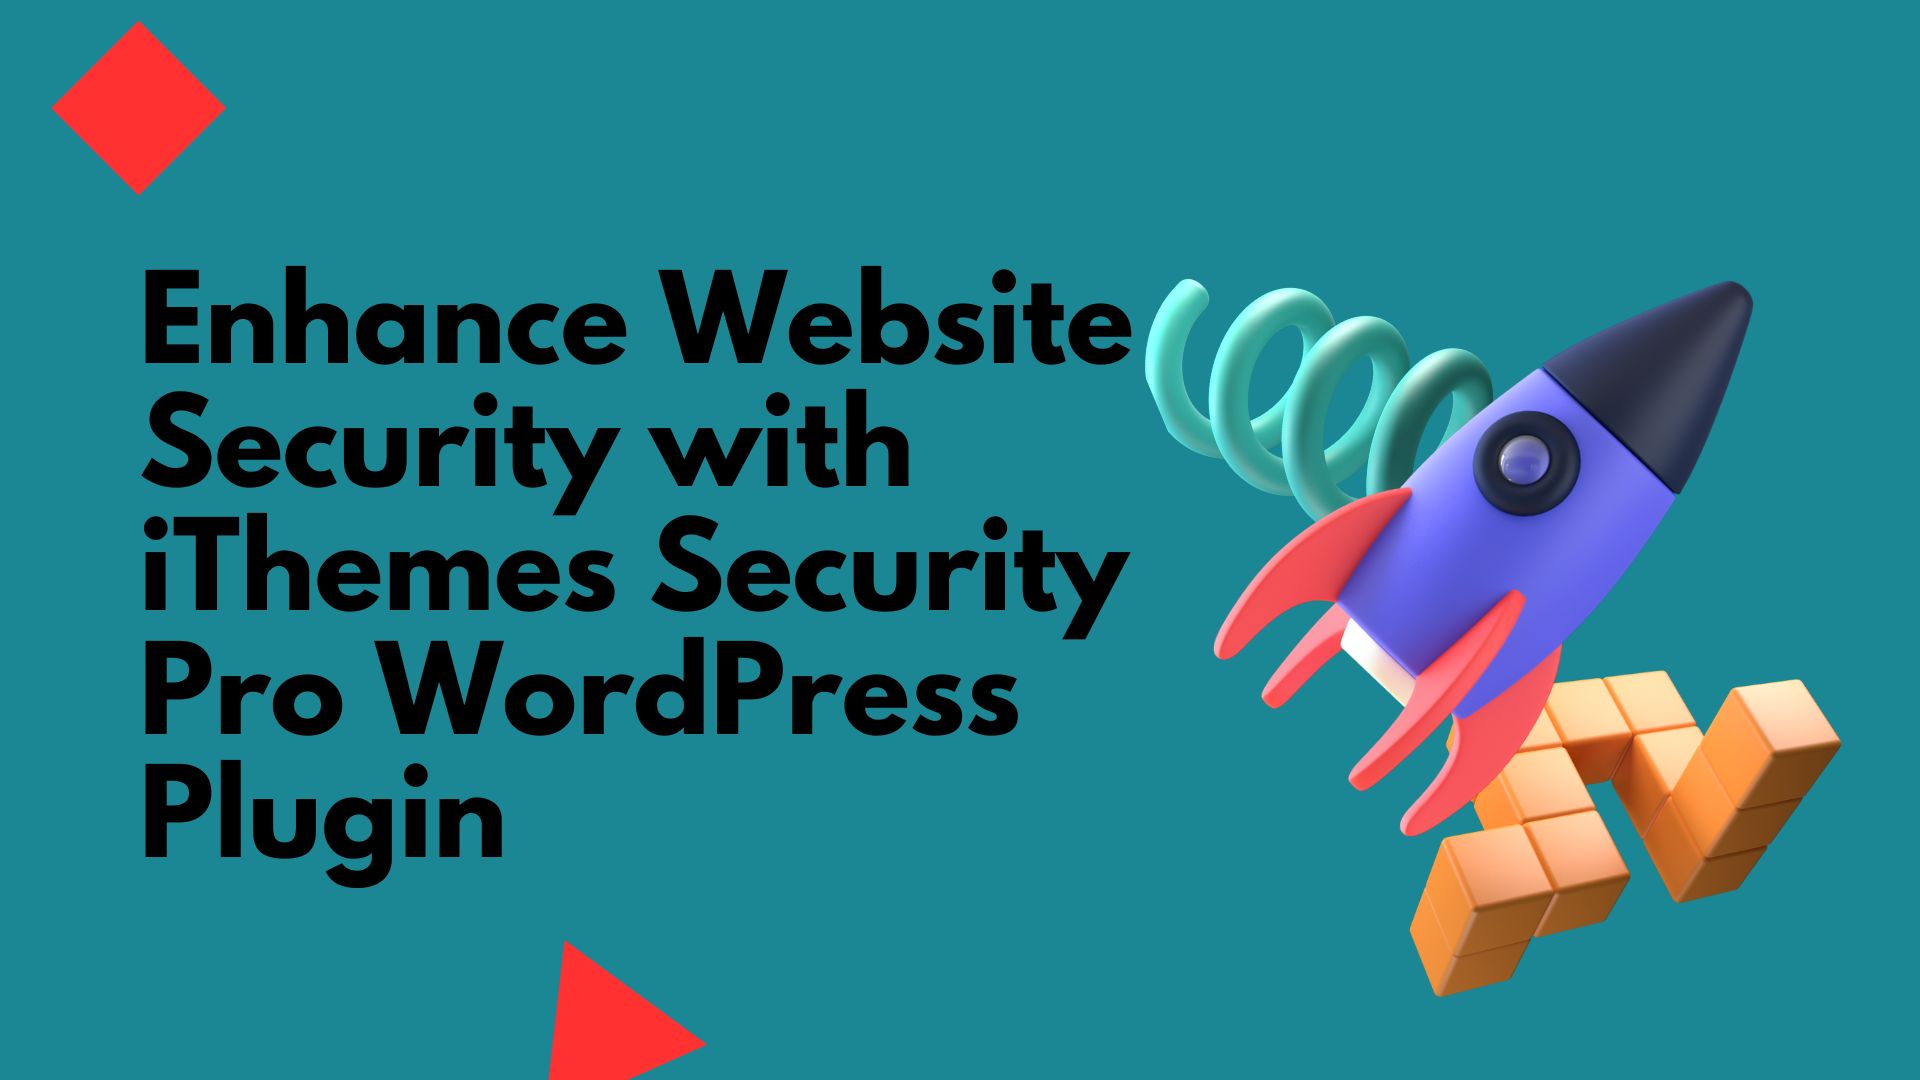 Enhance Website Security with iThemes Security Pro WordPress Plugin